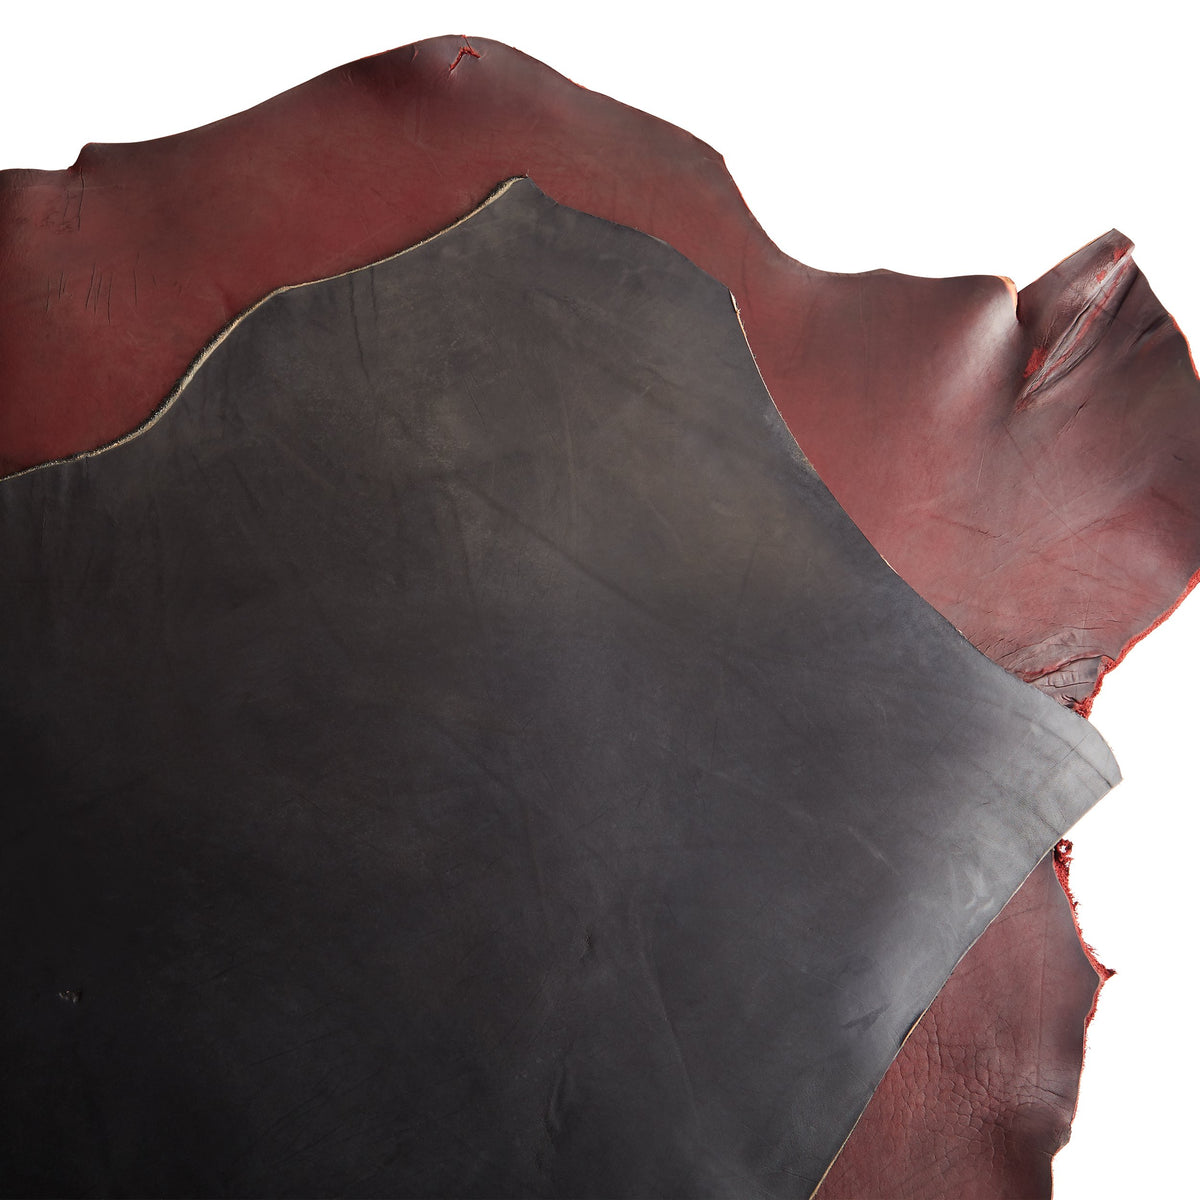 Tandy Leather Craft Latigo Leather Strip 72 L x 1/2 W 4752-00